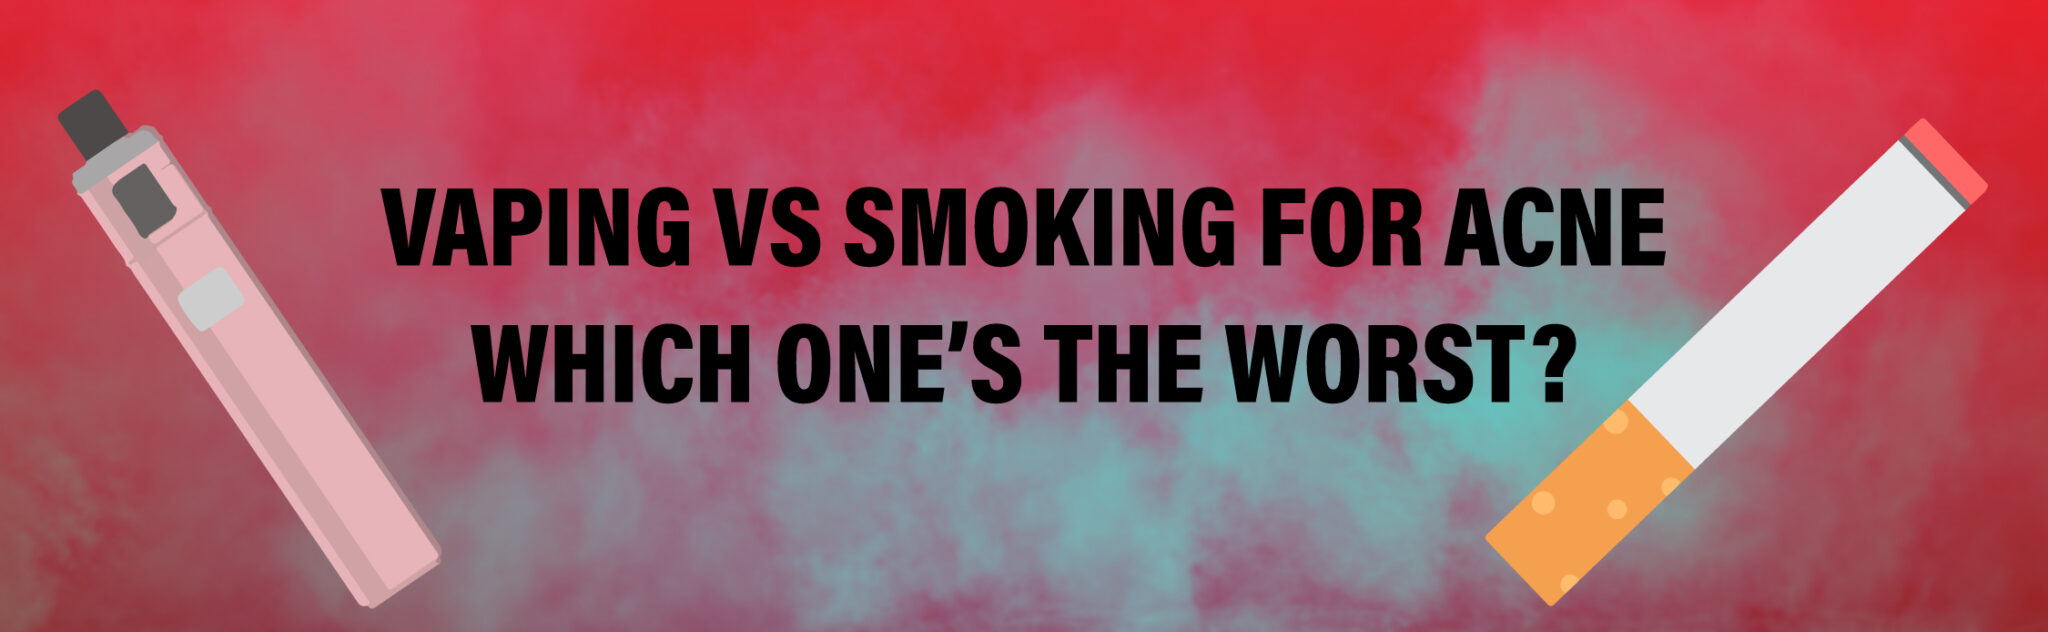 vPING VS SMOKING FOR ACNE